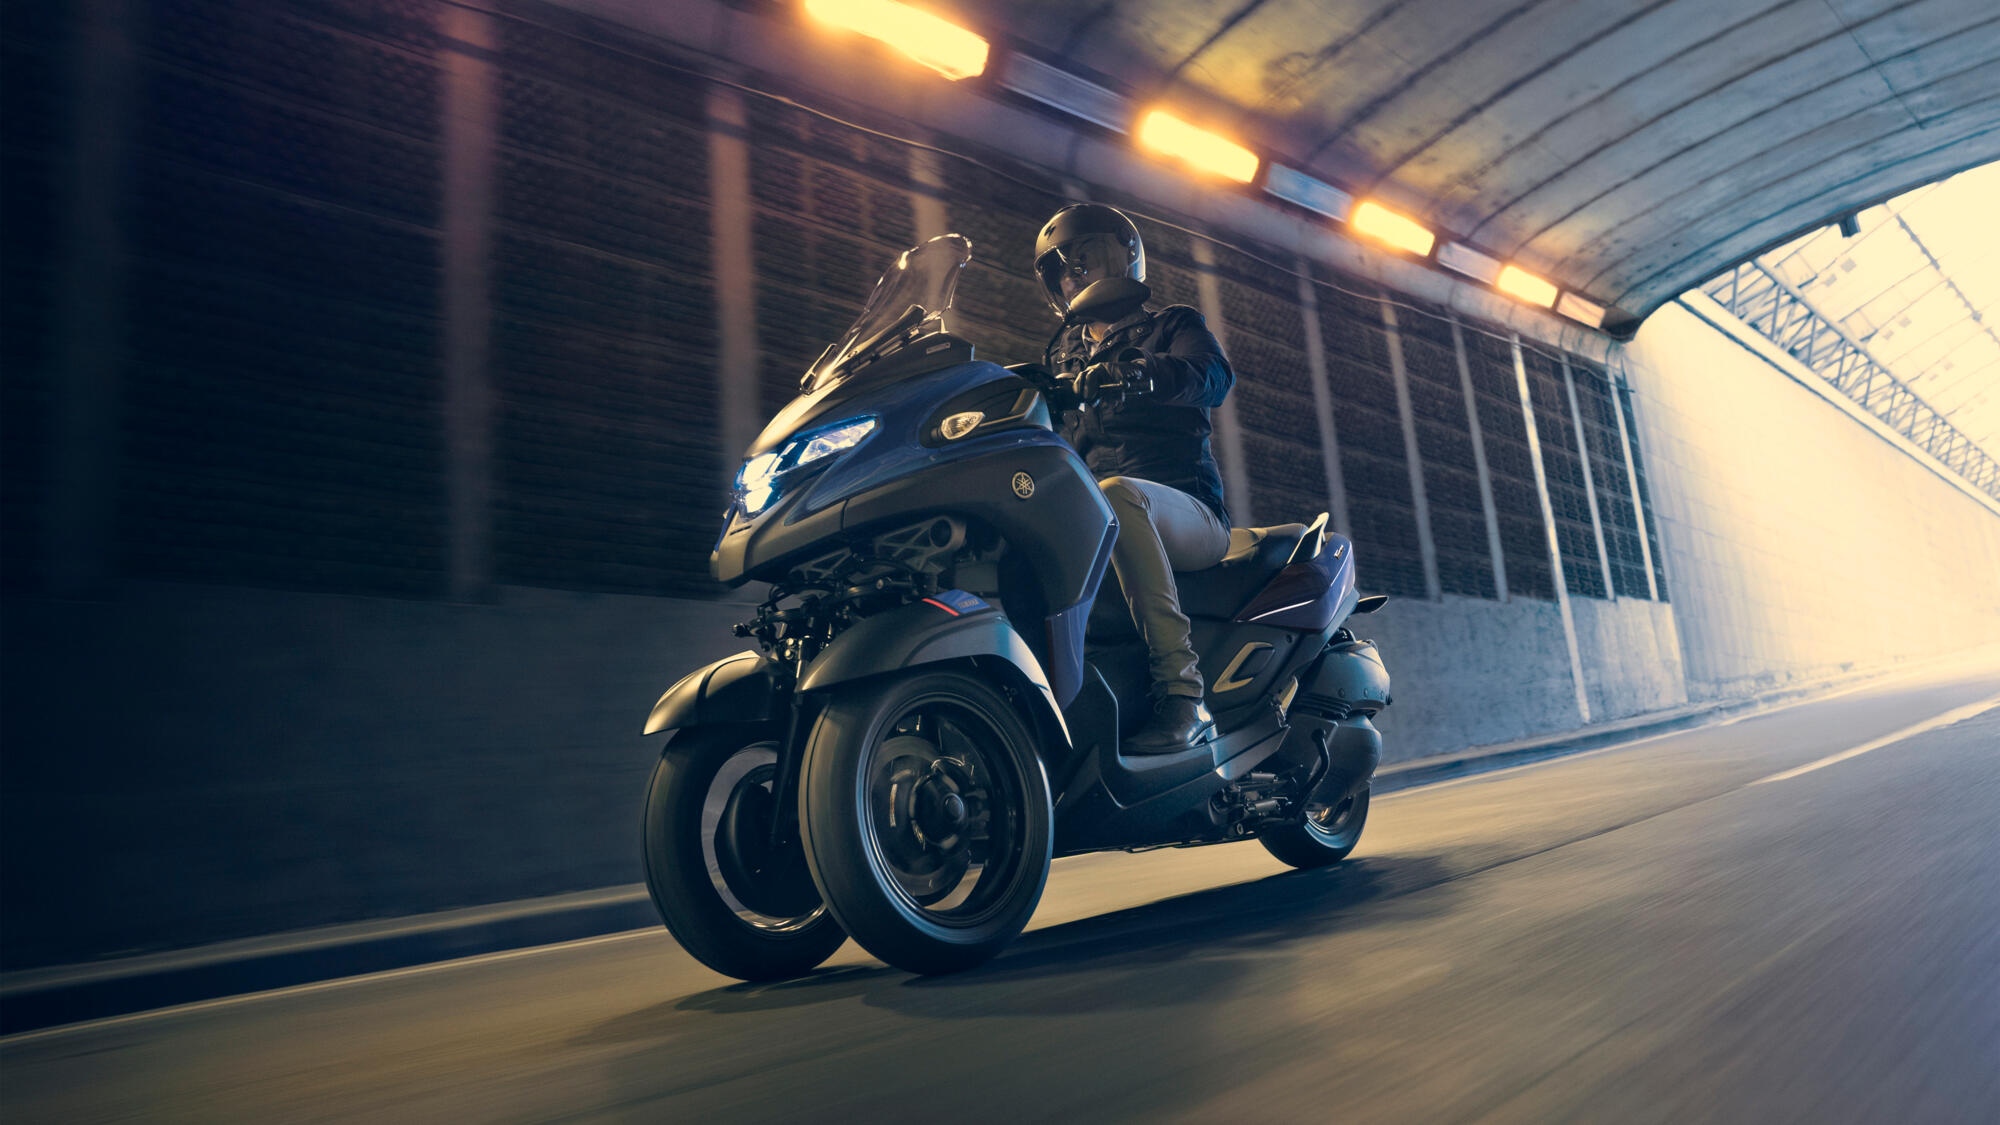 Yamaha Tricity 300 - three-wheel motorcycle